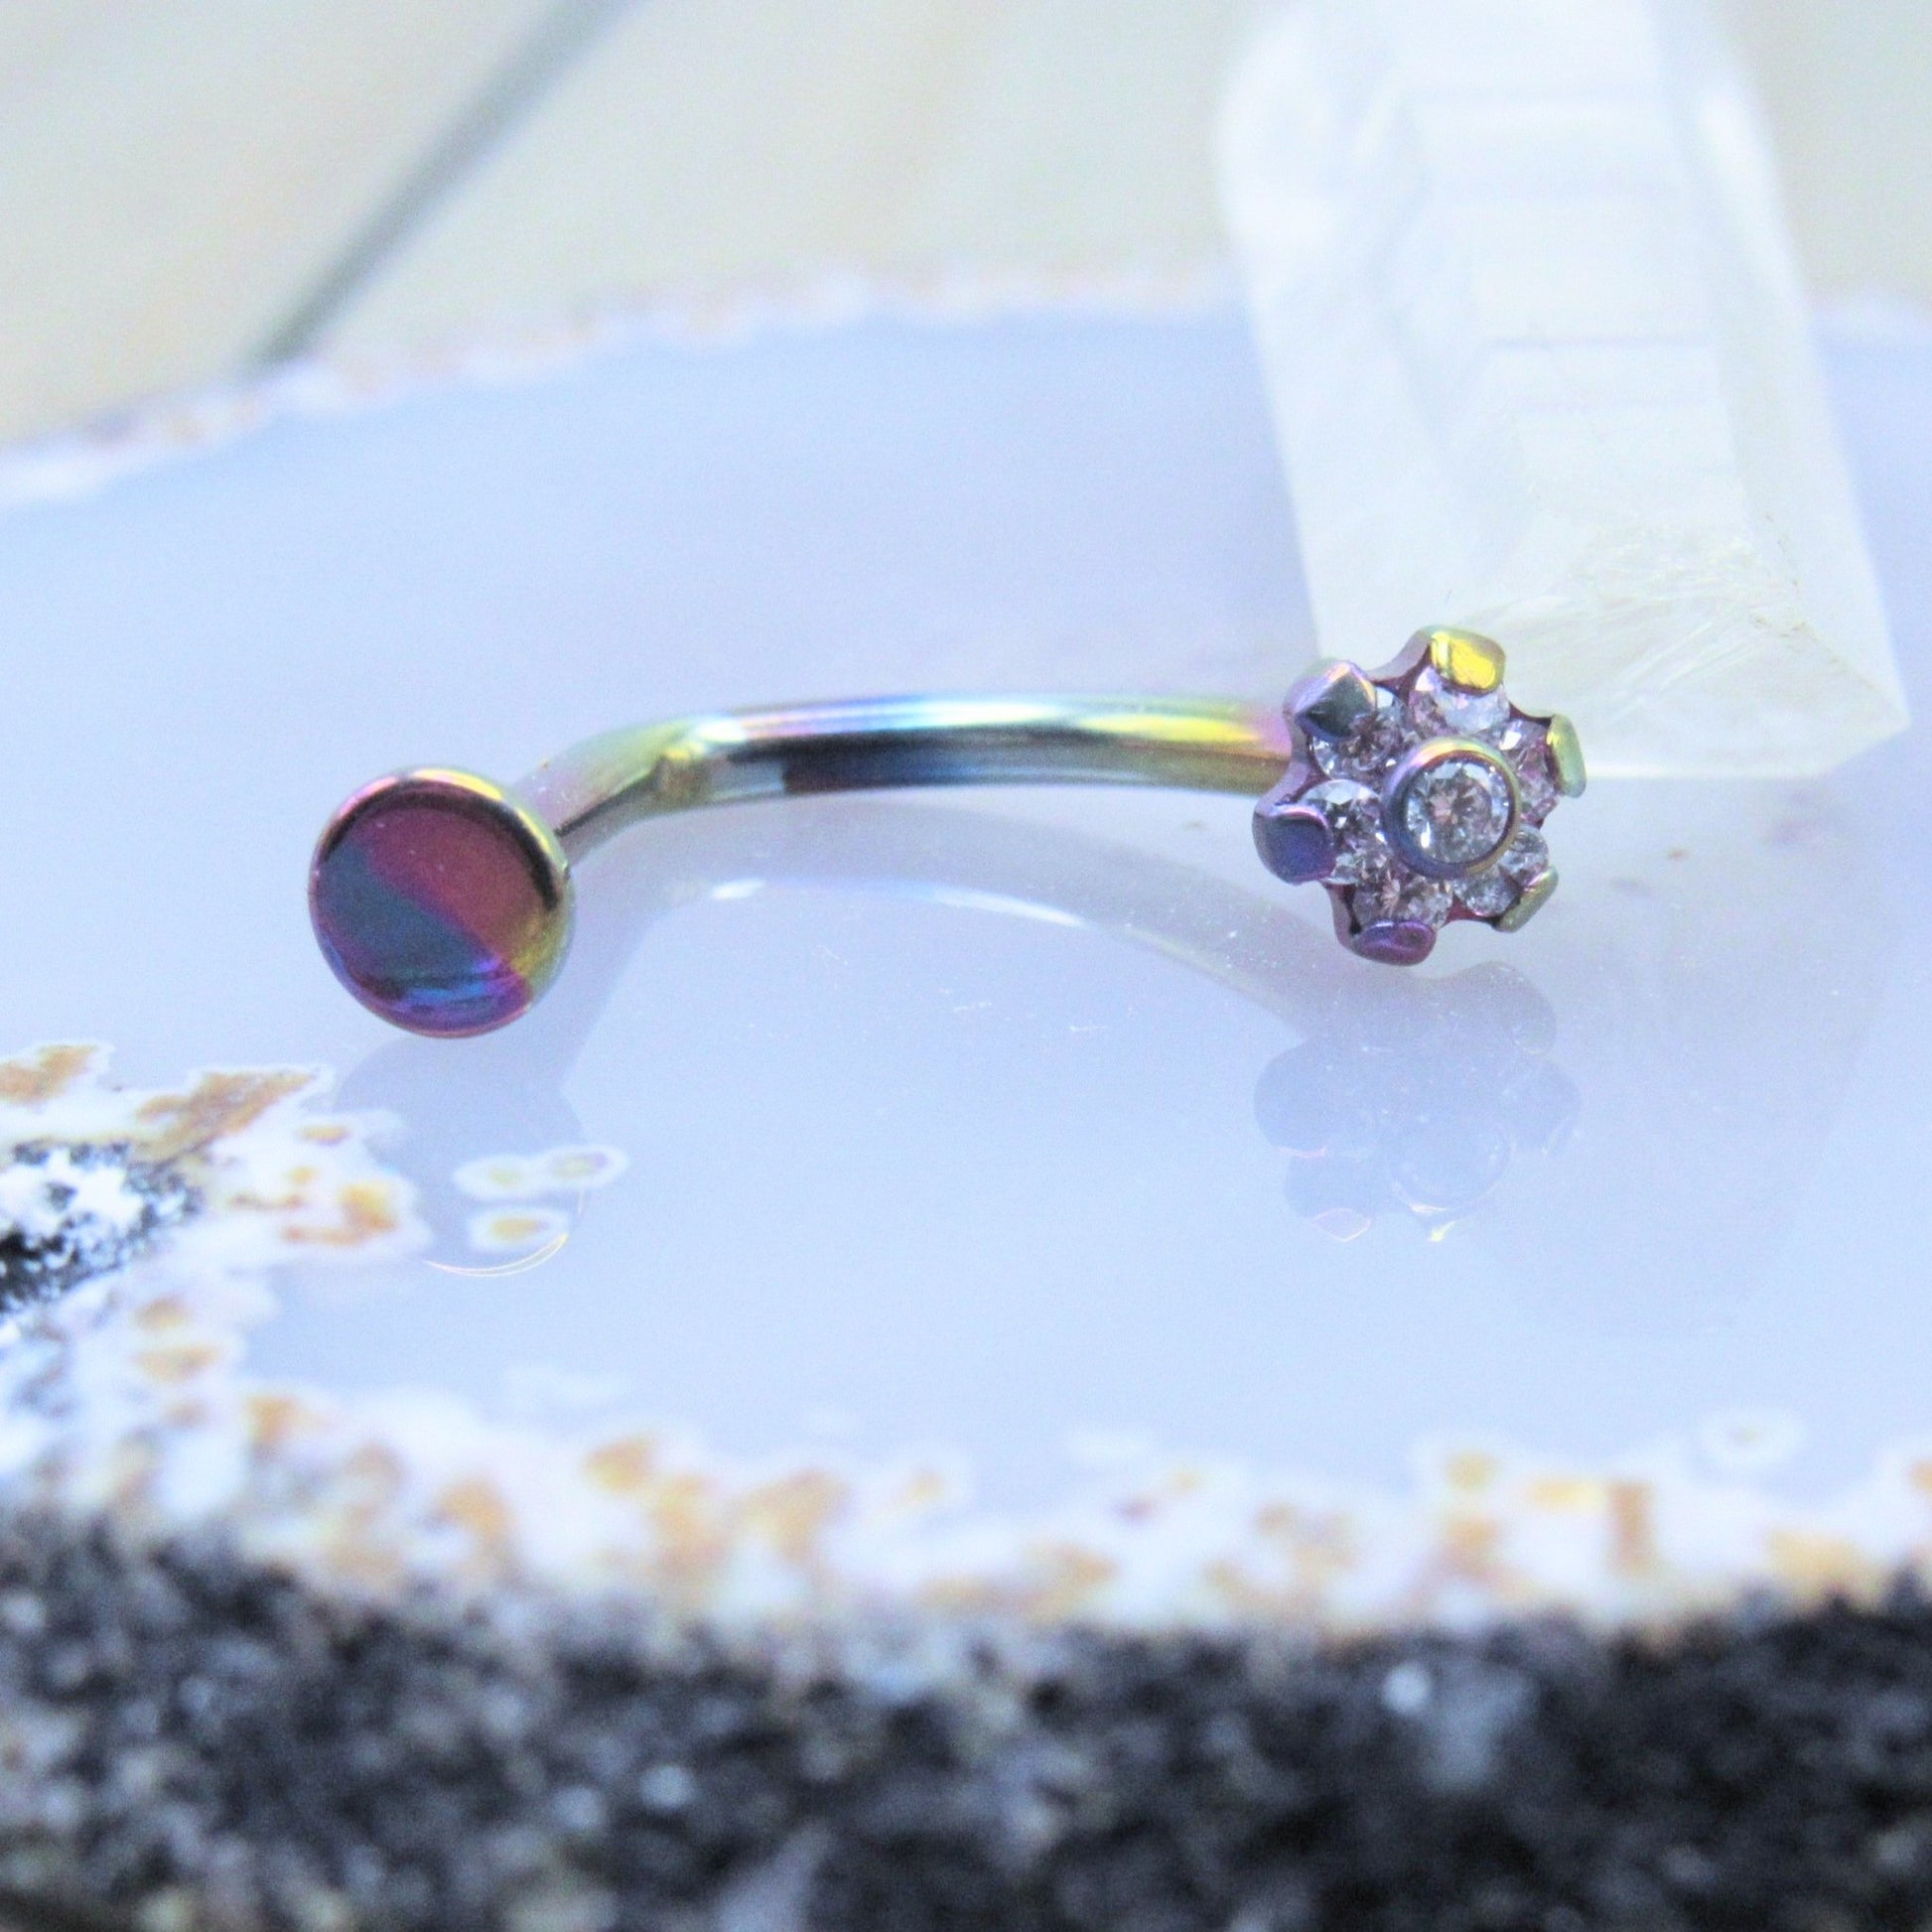 14g rainbow anodized deep navel piercing jewelry barbell